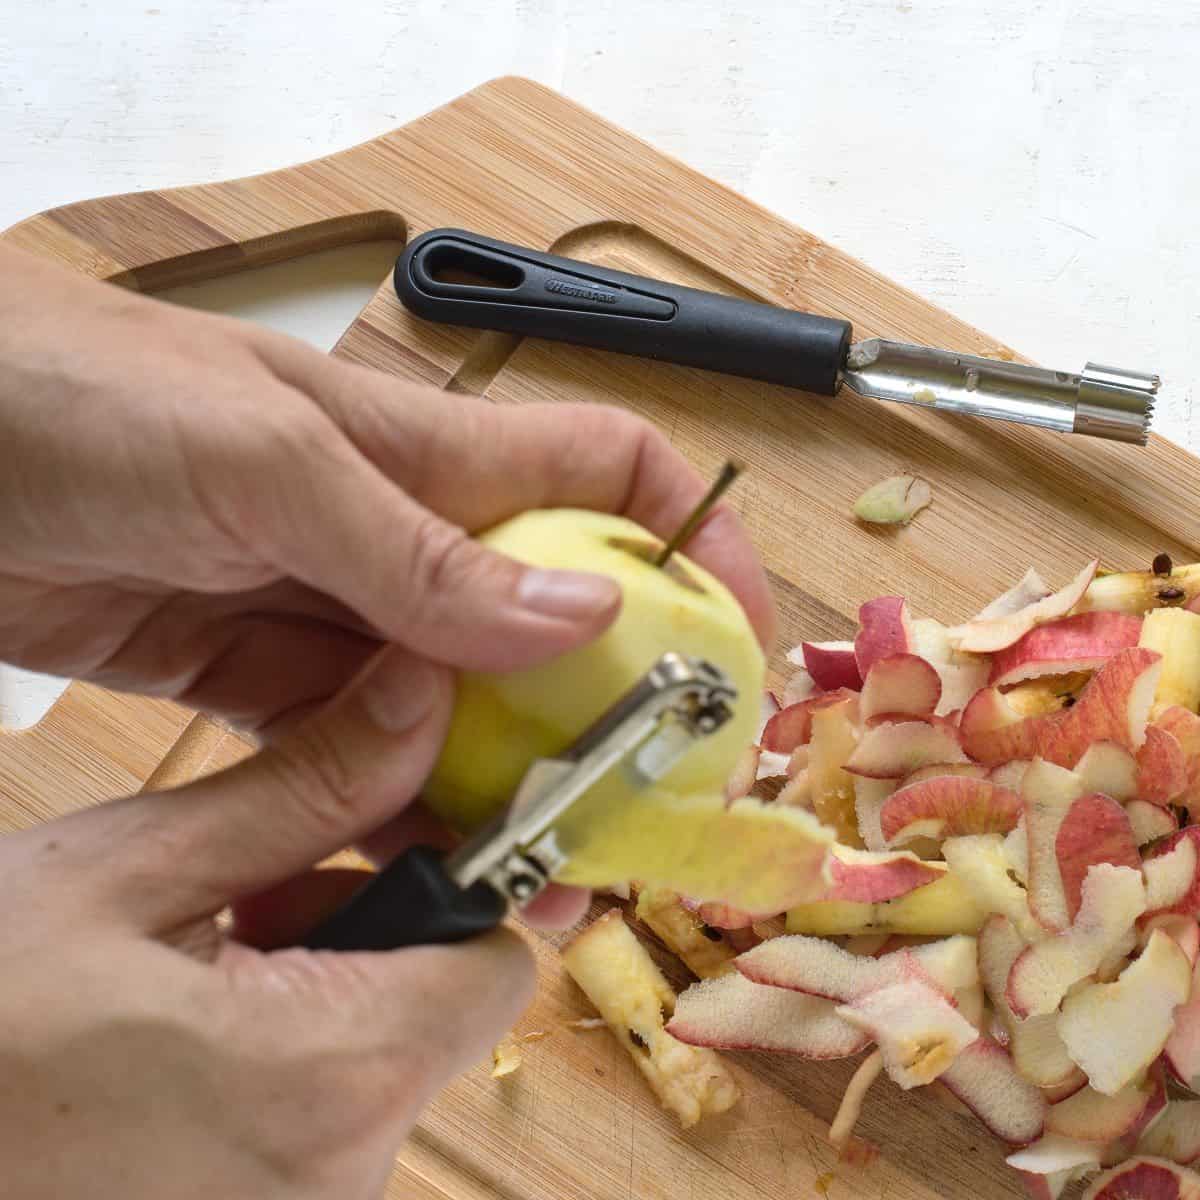 Peeling apples with a peeler.